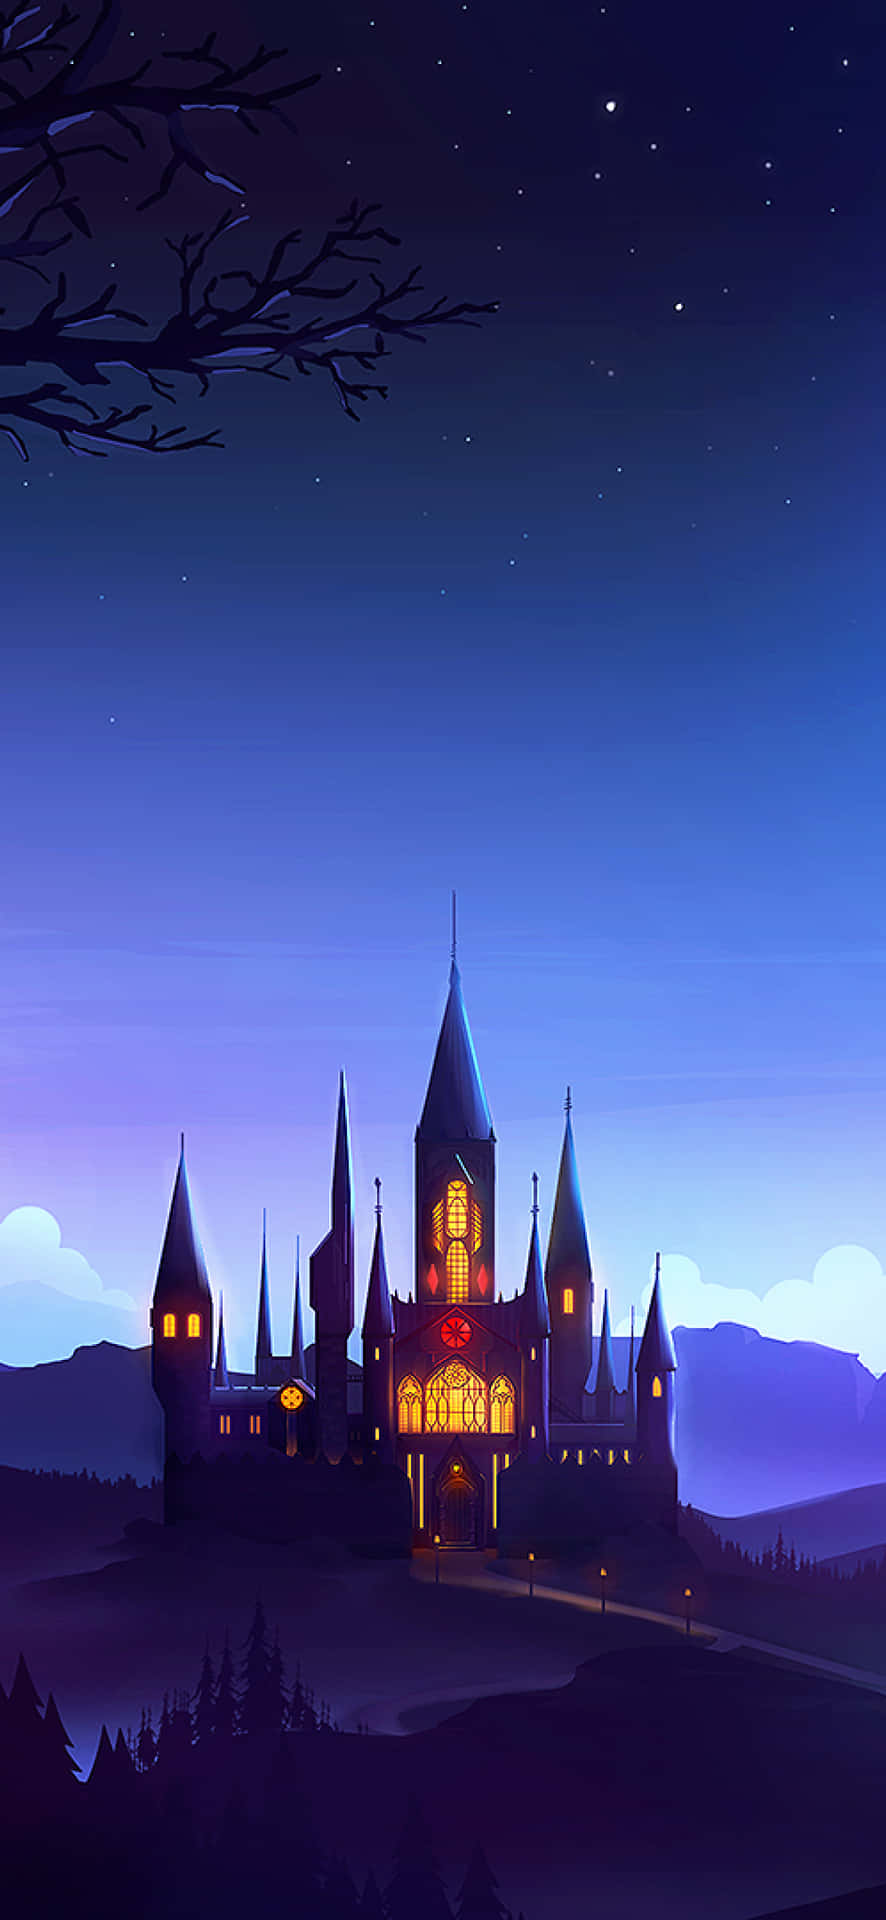 Enchanted Castle Nighttime Illustration Wallpaper